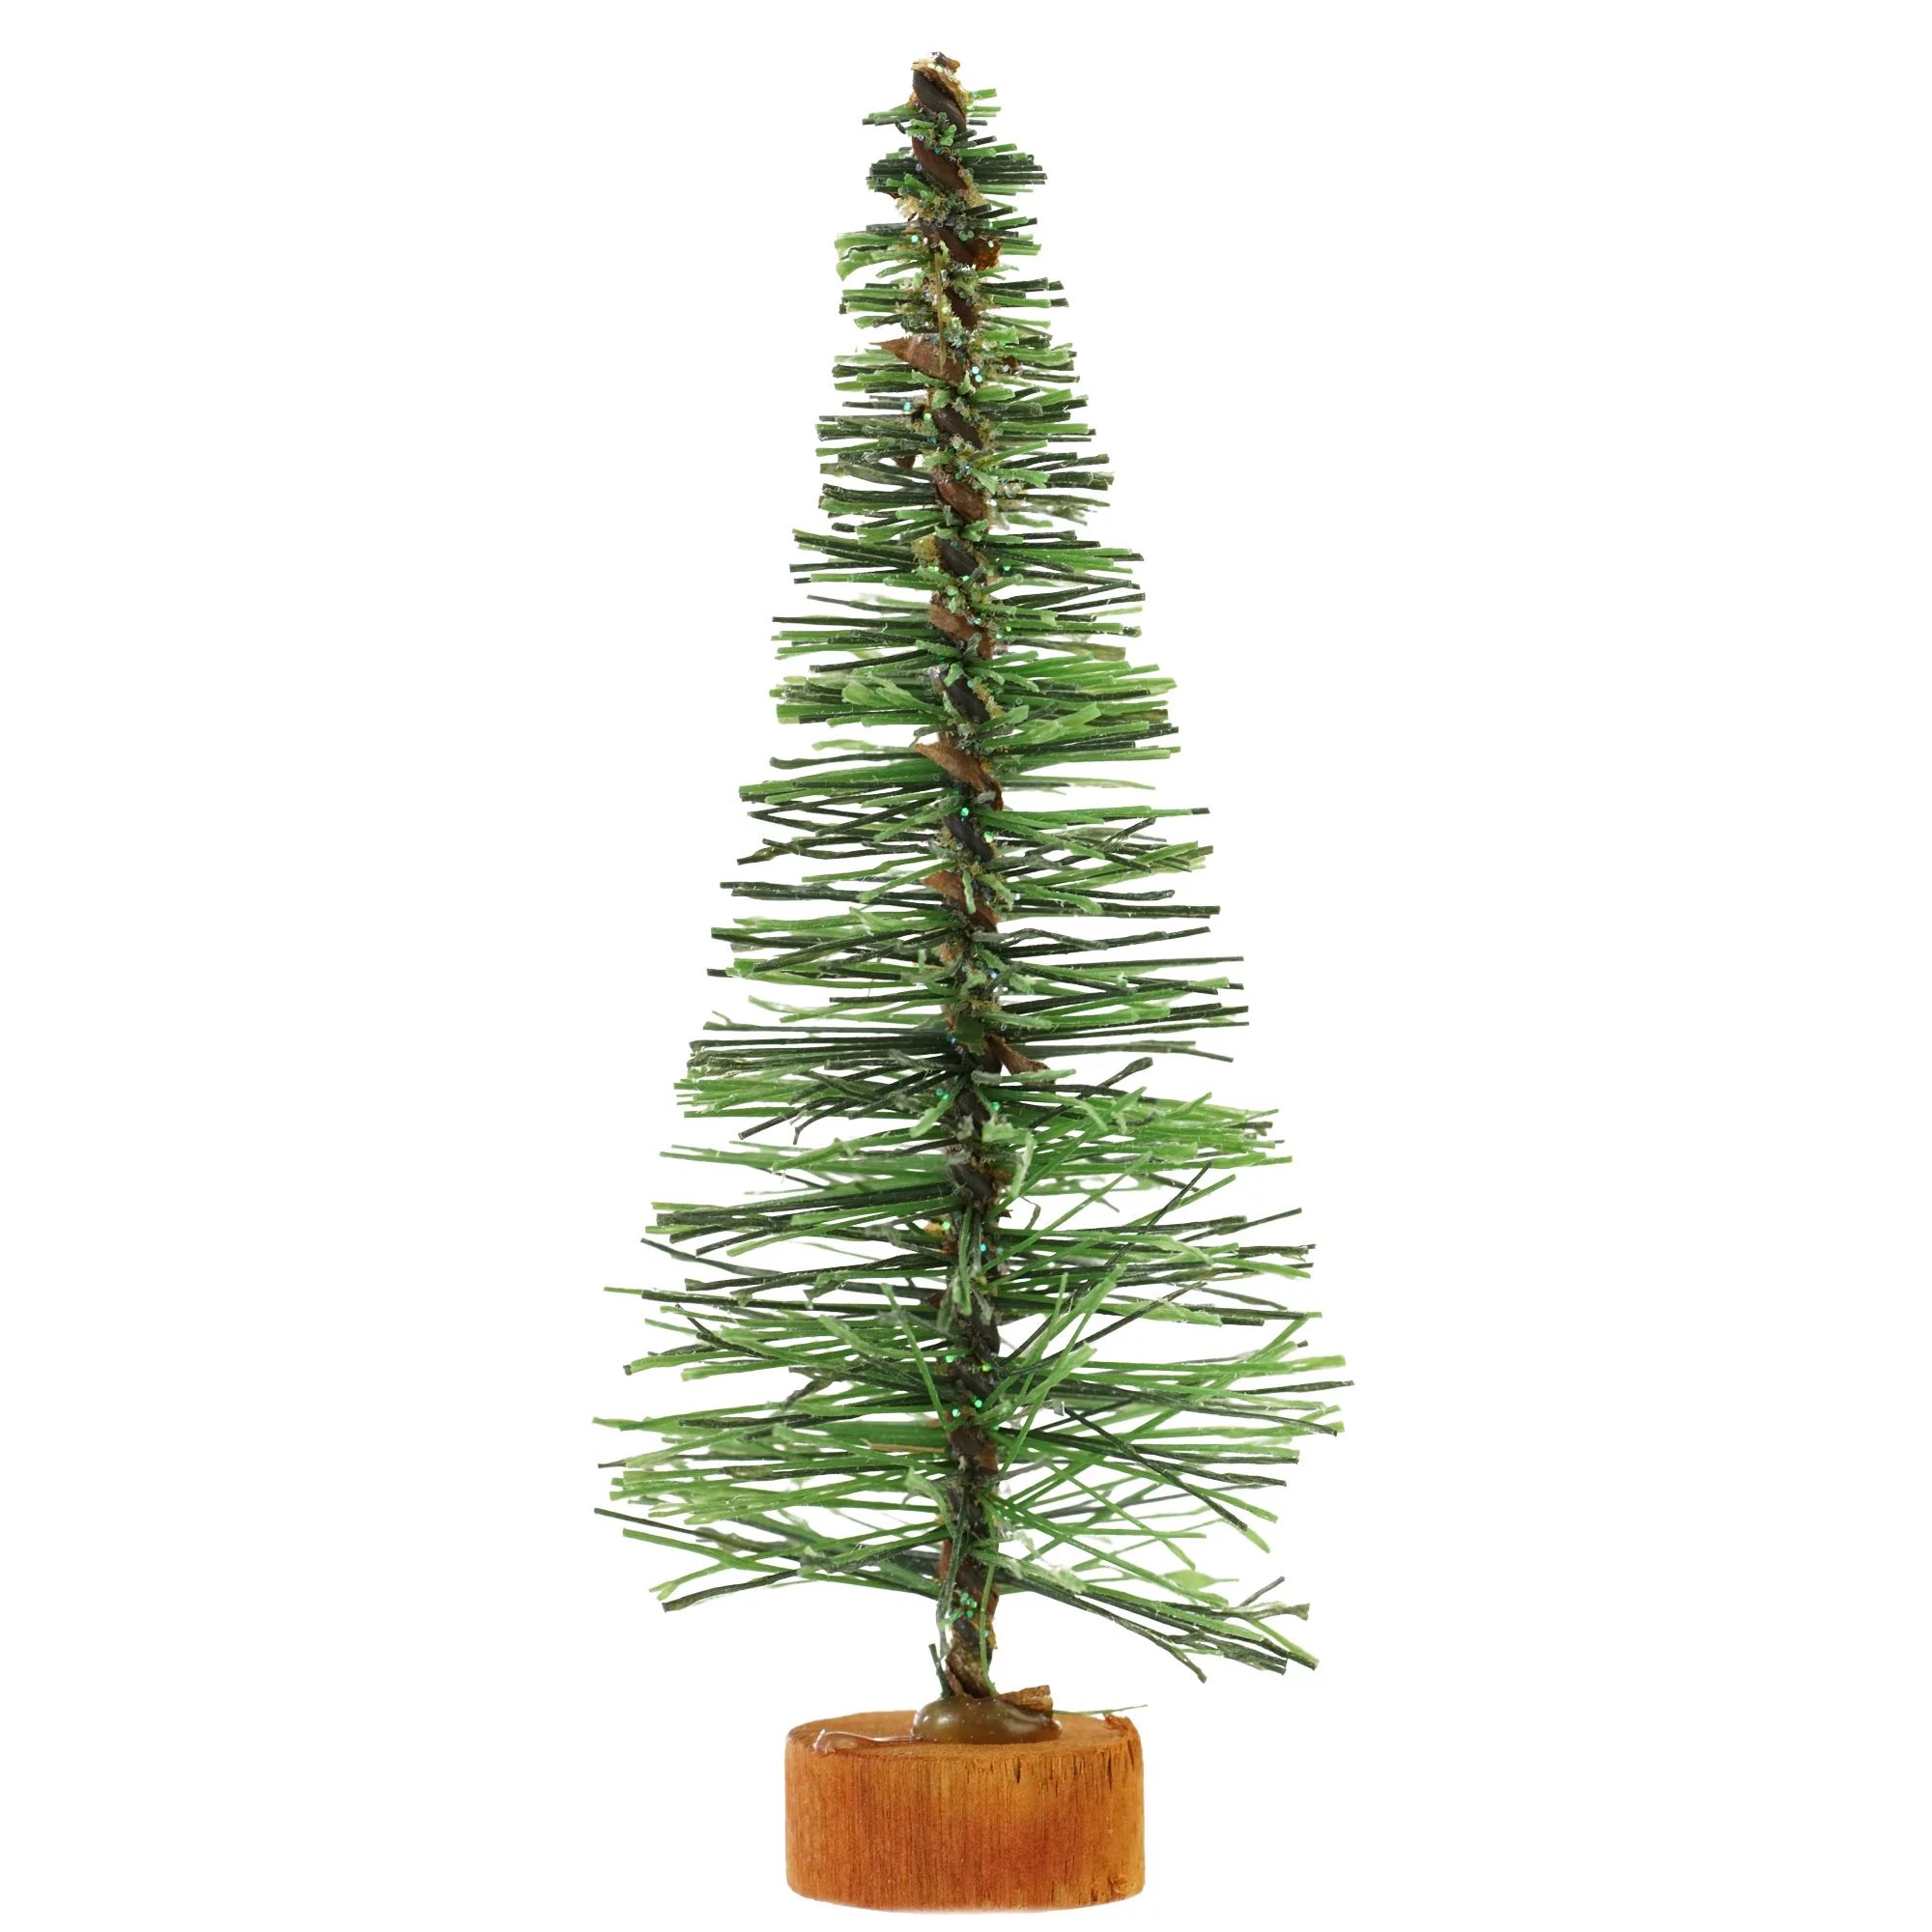 5" Green Bottle Brush Artificial Mini Pine Christmas Tree - Unlit | Walmart (US)